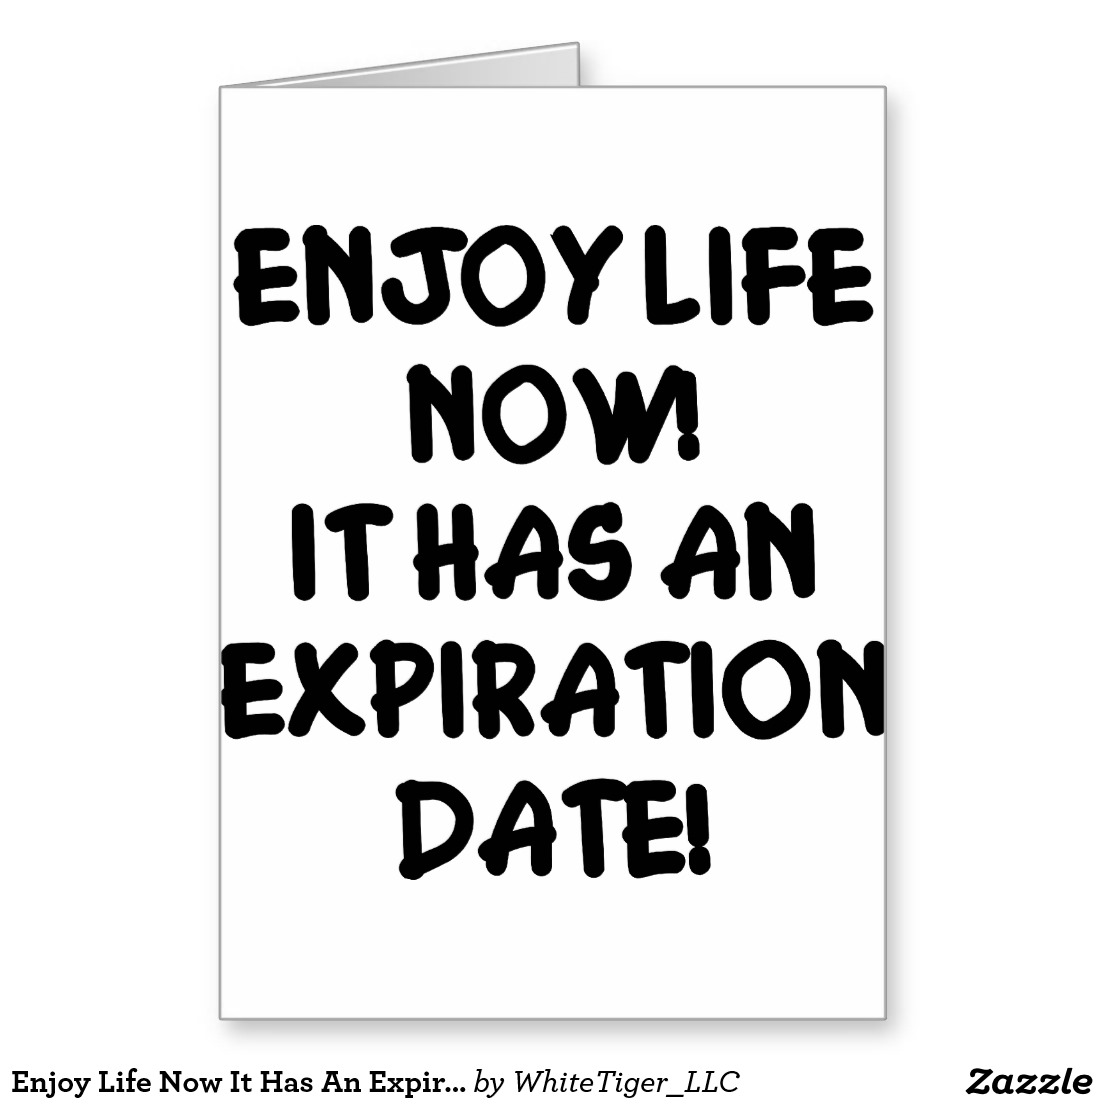 Enjoy life now - it has an expiration date!